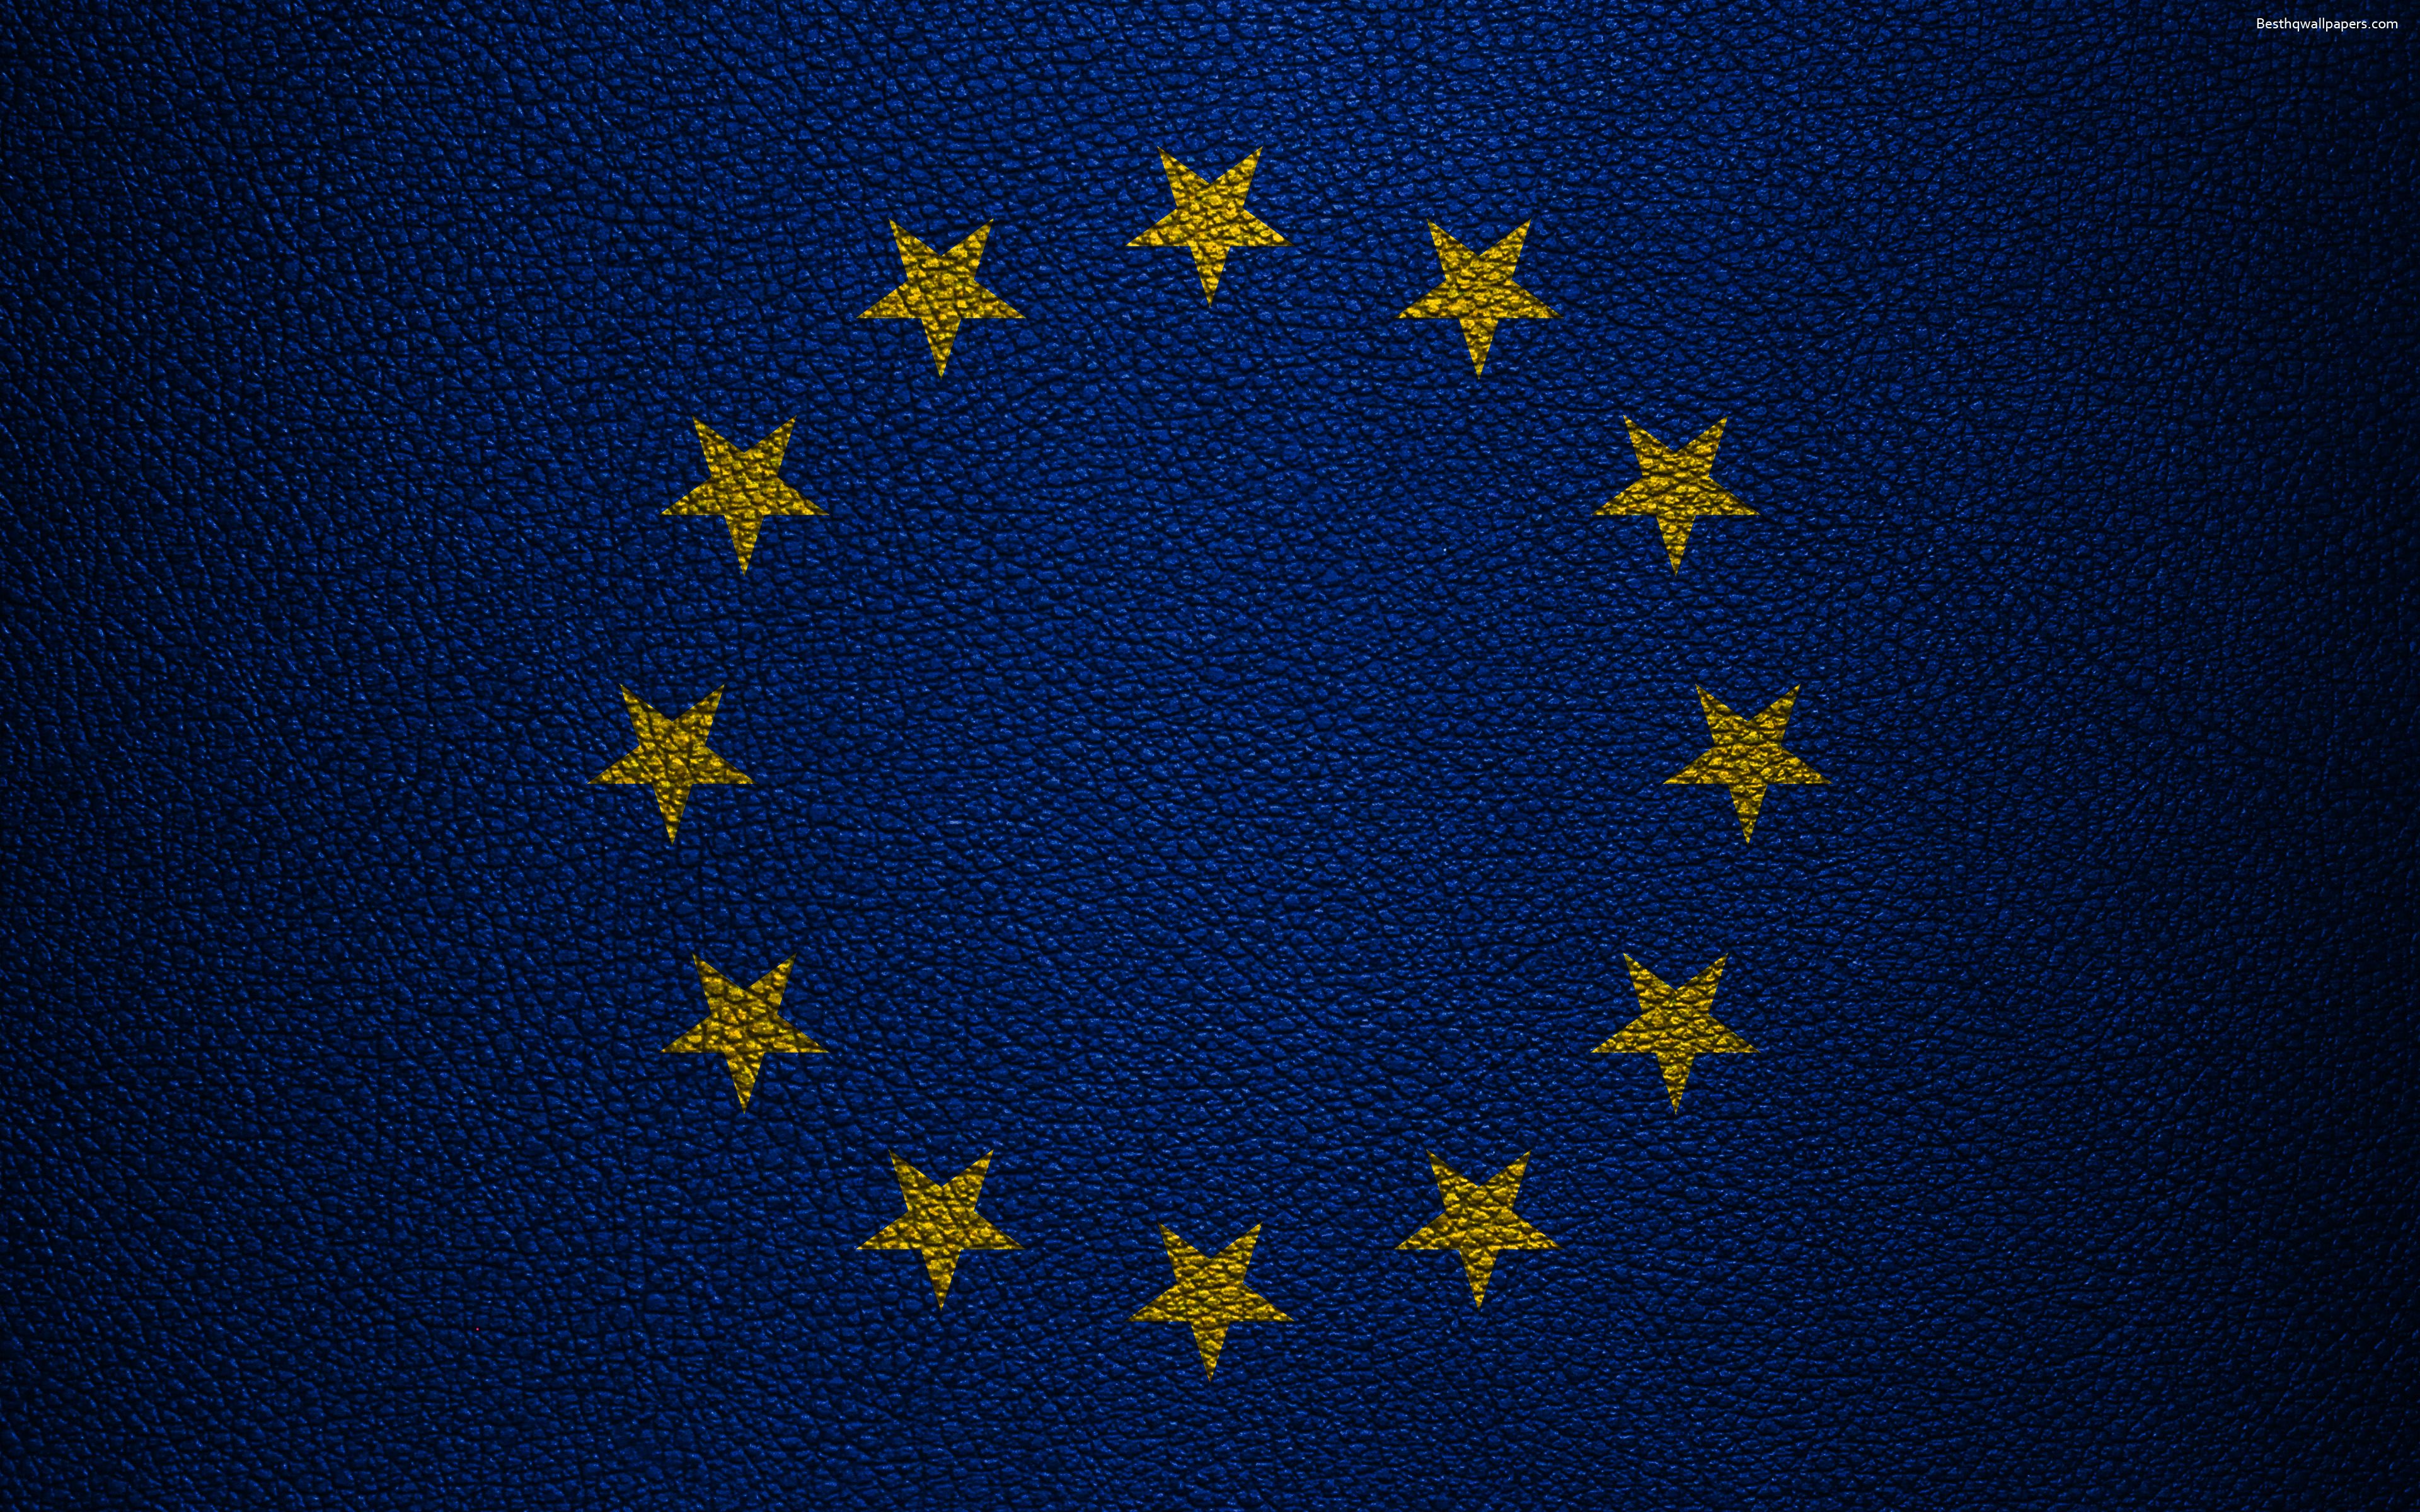 Free download Download wallpaper European Union Flag 4K